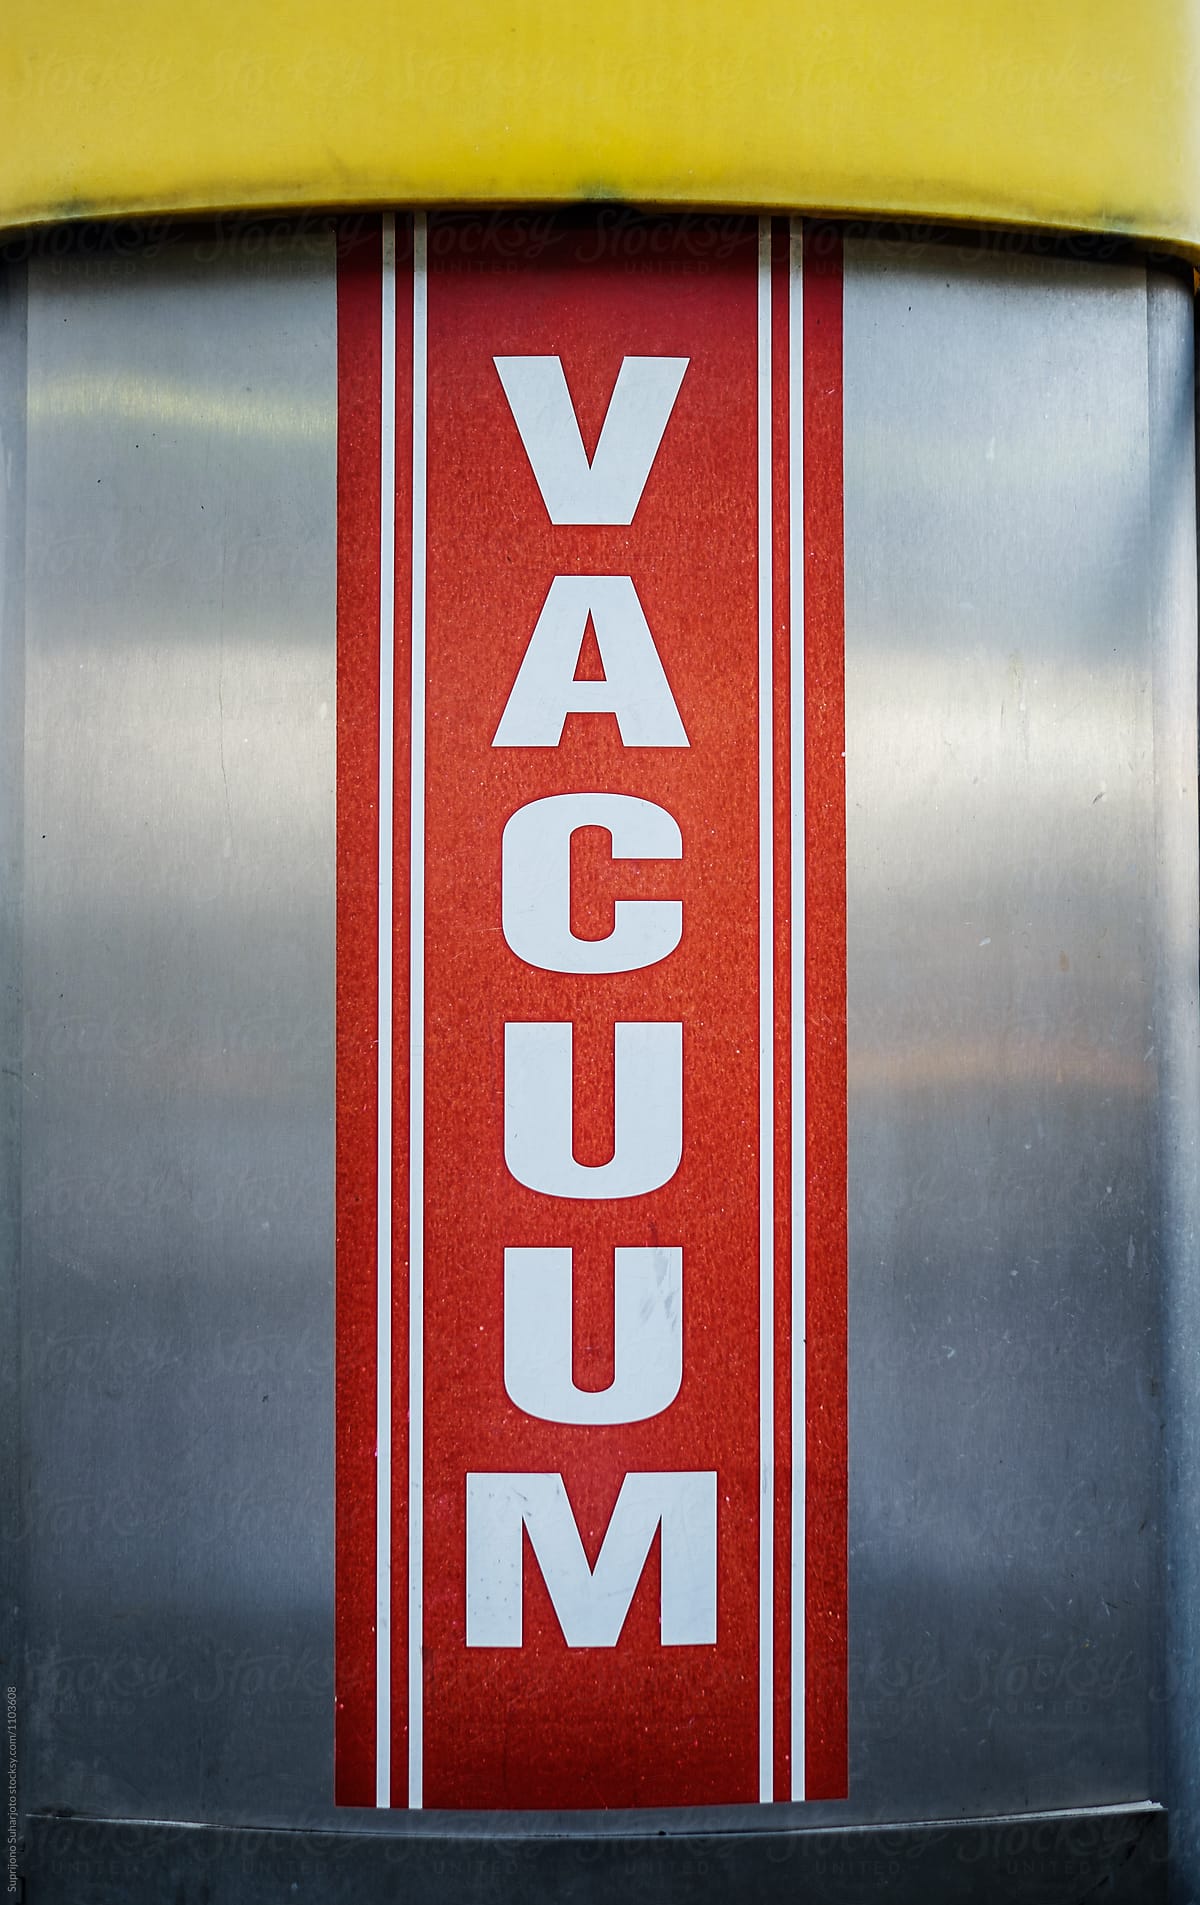 Vacuum cleaner machine at a car wash